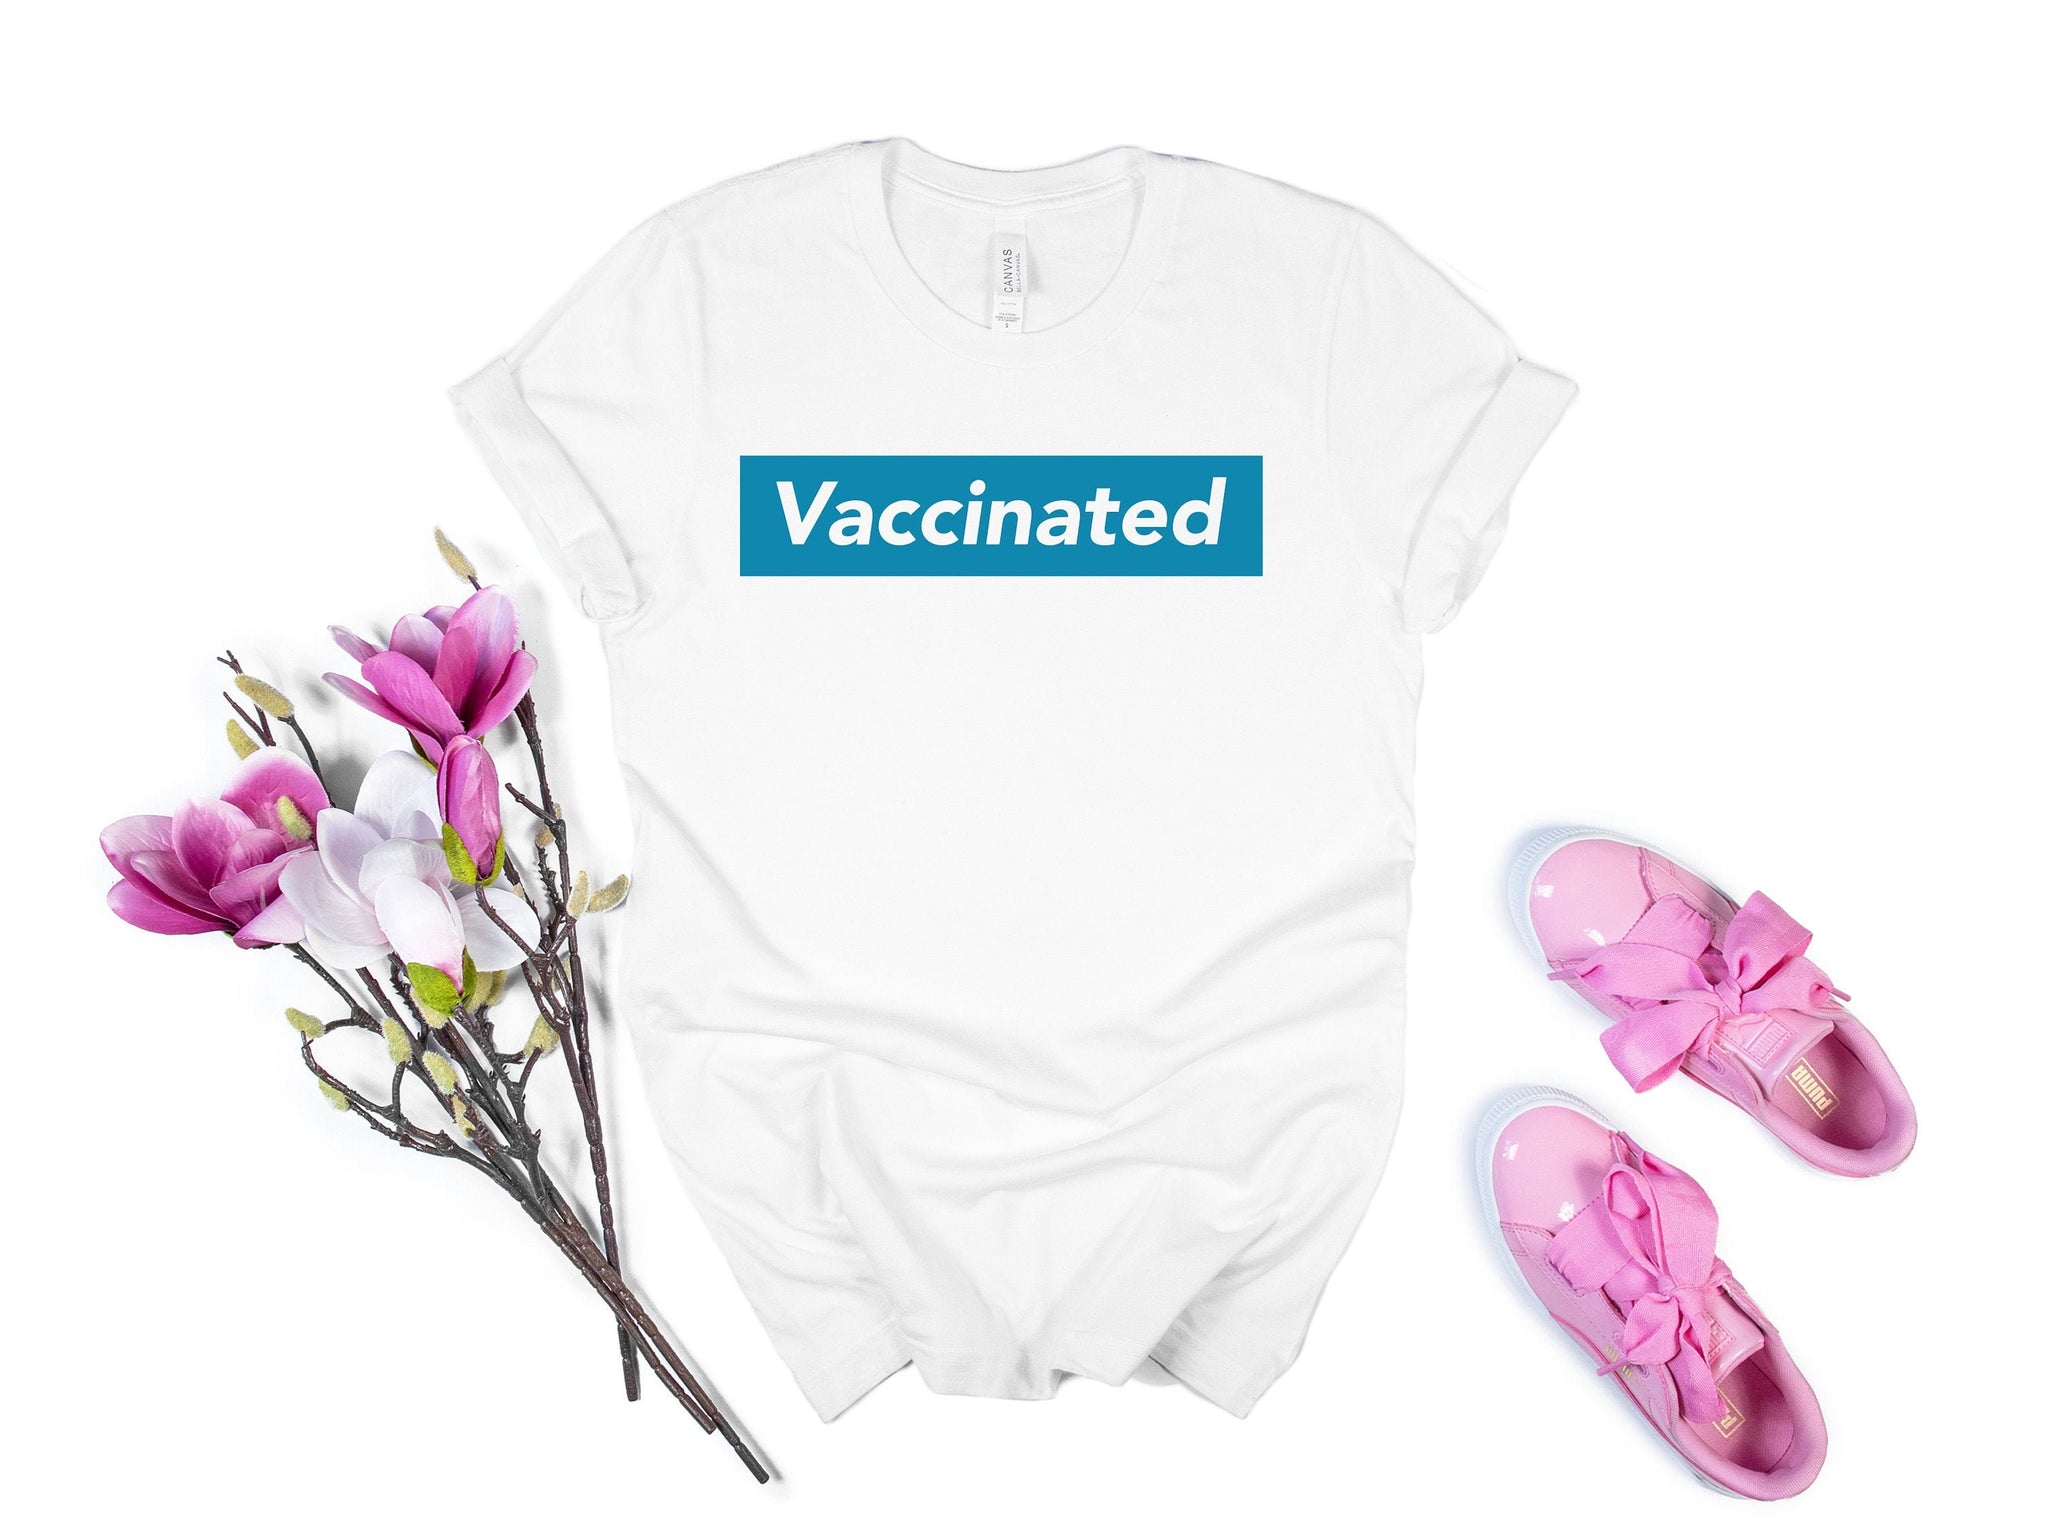 Vaccinated Shirt, Vaccinated AF Shirt, Vaccine Shirt, Vaccinated Shirt, Vaccine Shirt, Covid 19 Vaccine Shirt